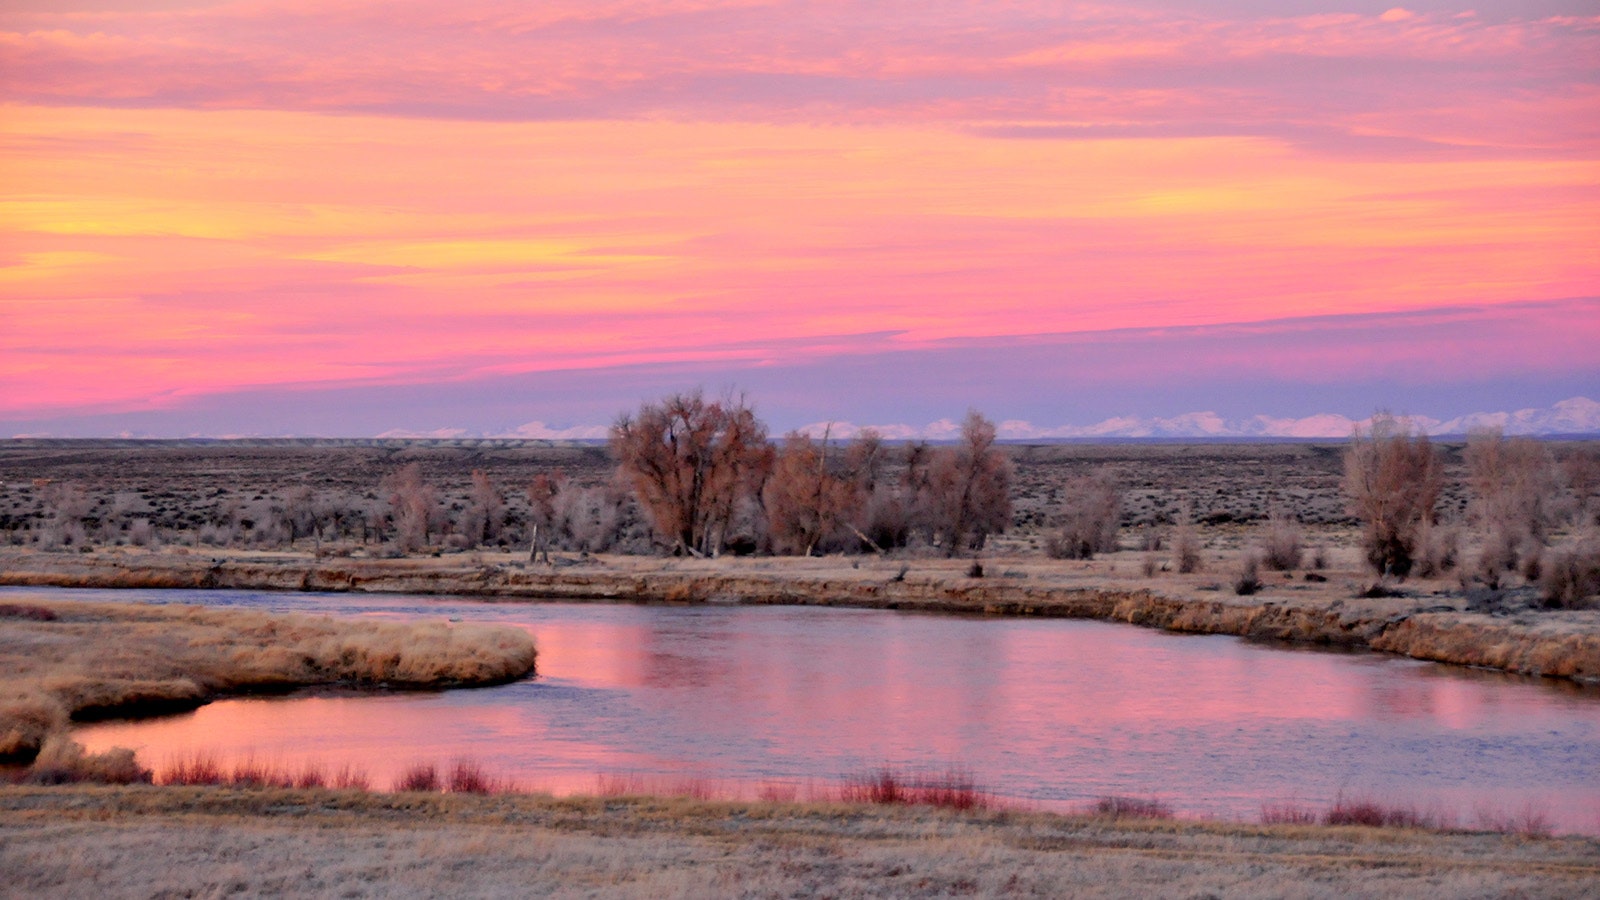 Sunset at Seedskadee National Wildlife Refuge in Wyoming.